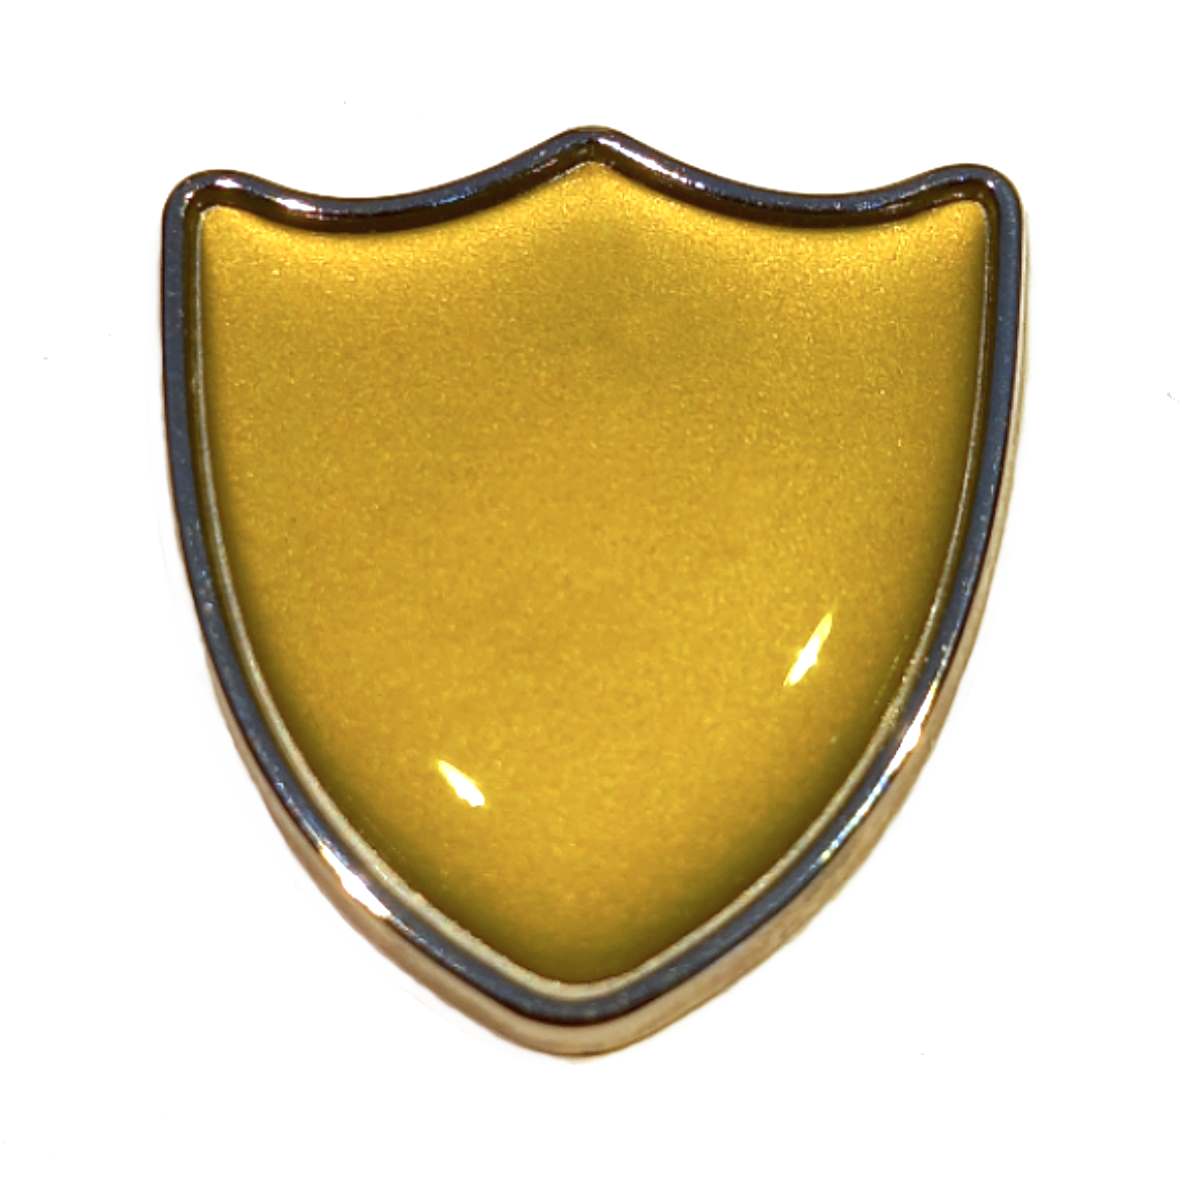 Gold shield badge